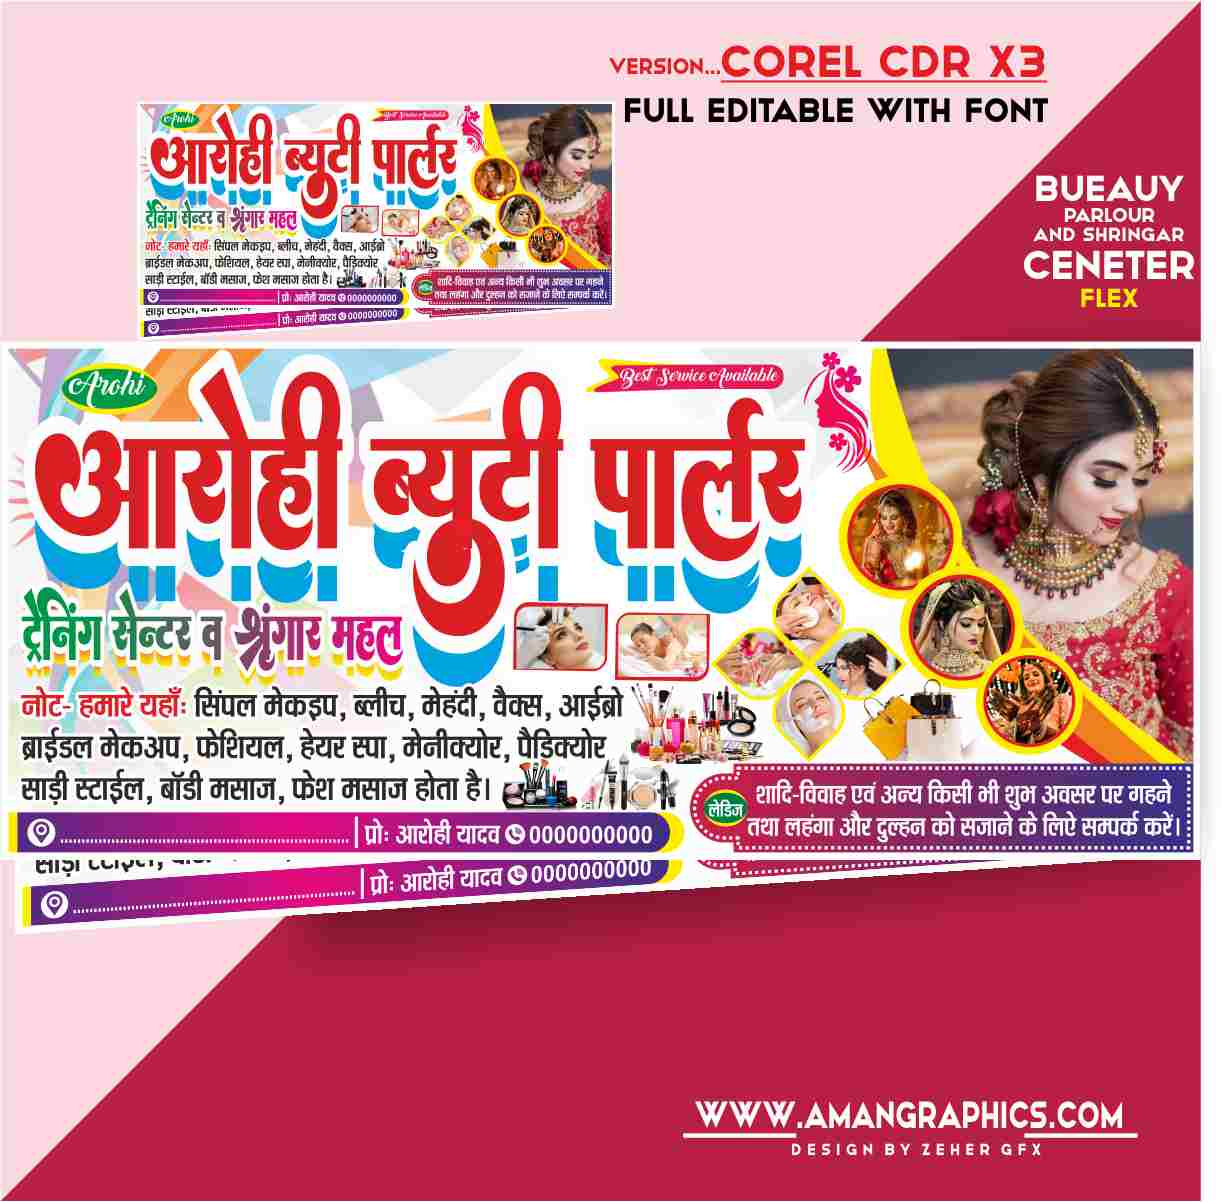 Arohi Beauty Parlour And Training Center & Shringar Mahal Banner Design Cdr File FLEX BANNER FLEX